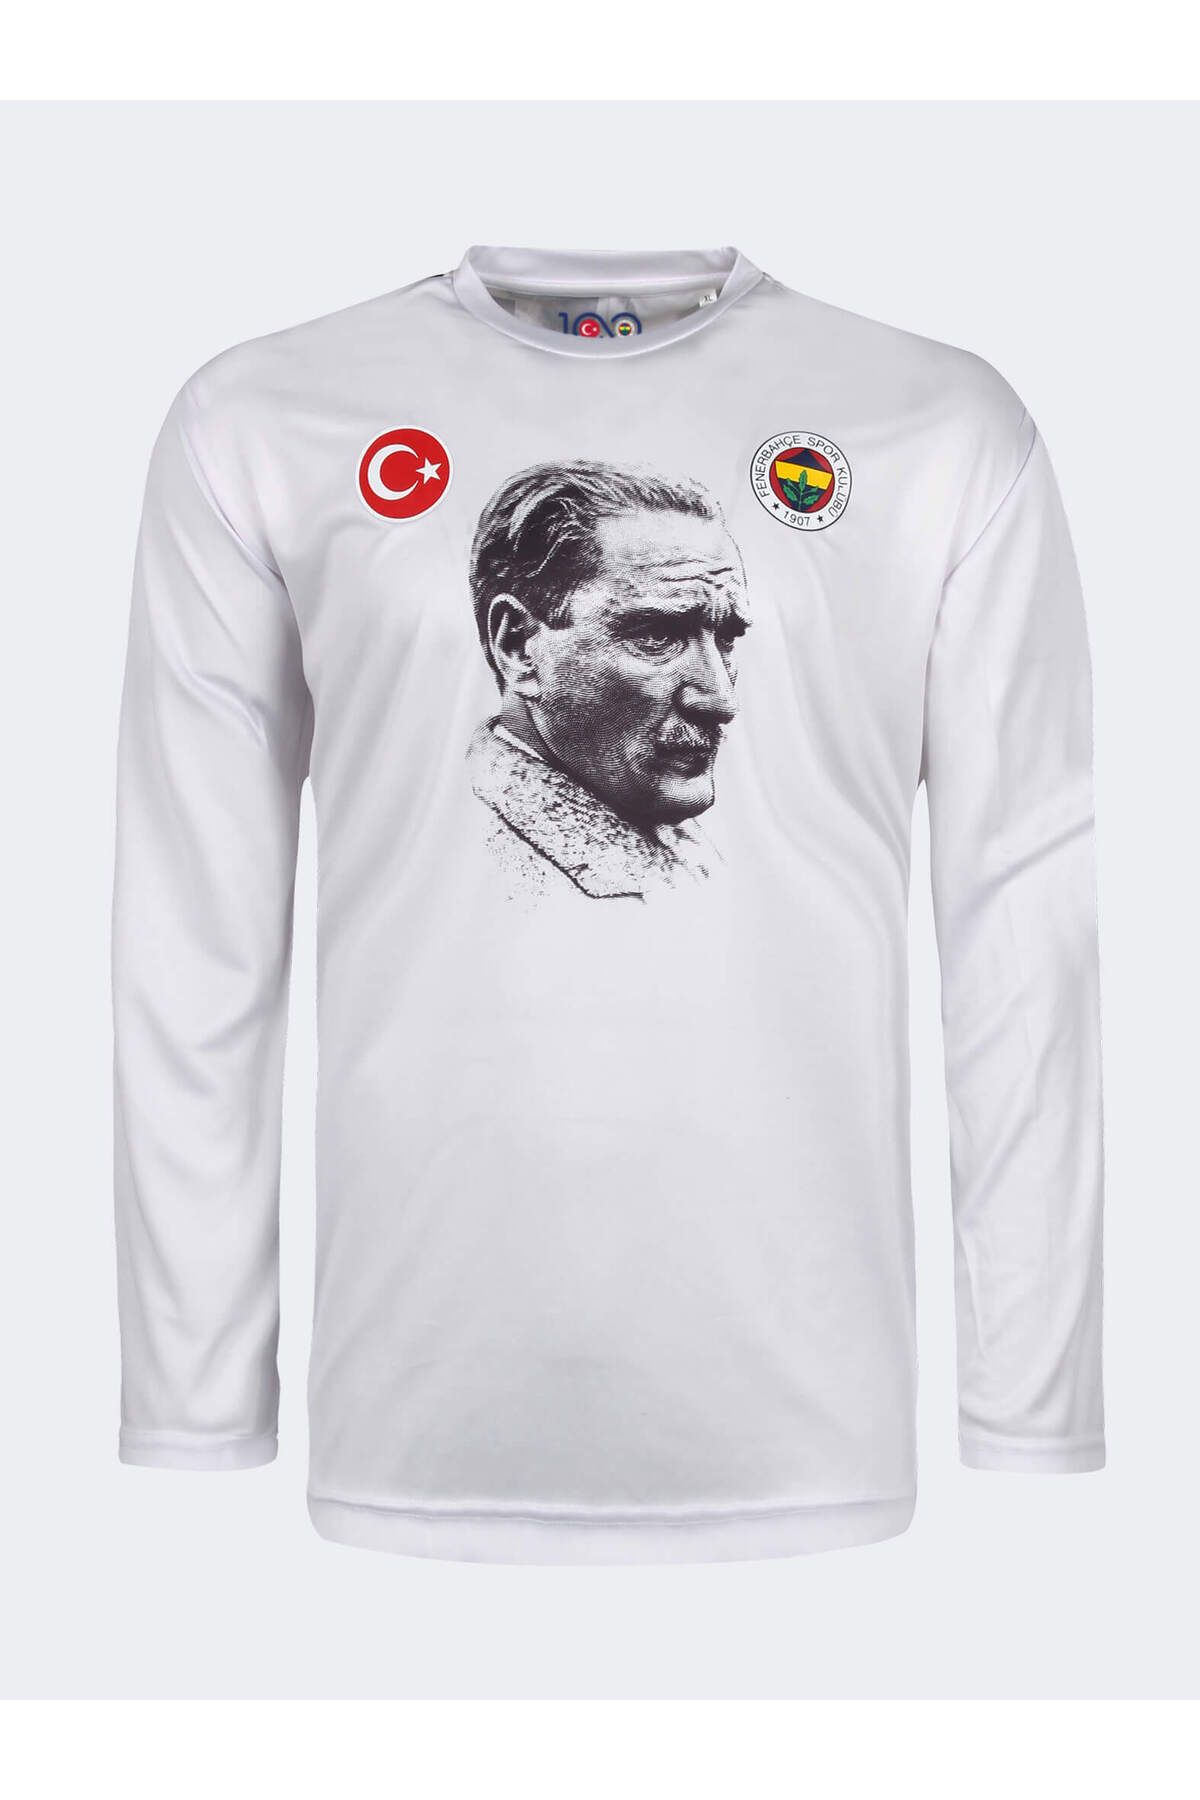 Fenerbahçe YURTTA SULH CİHANDA SULH FORMA